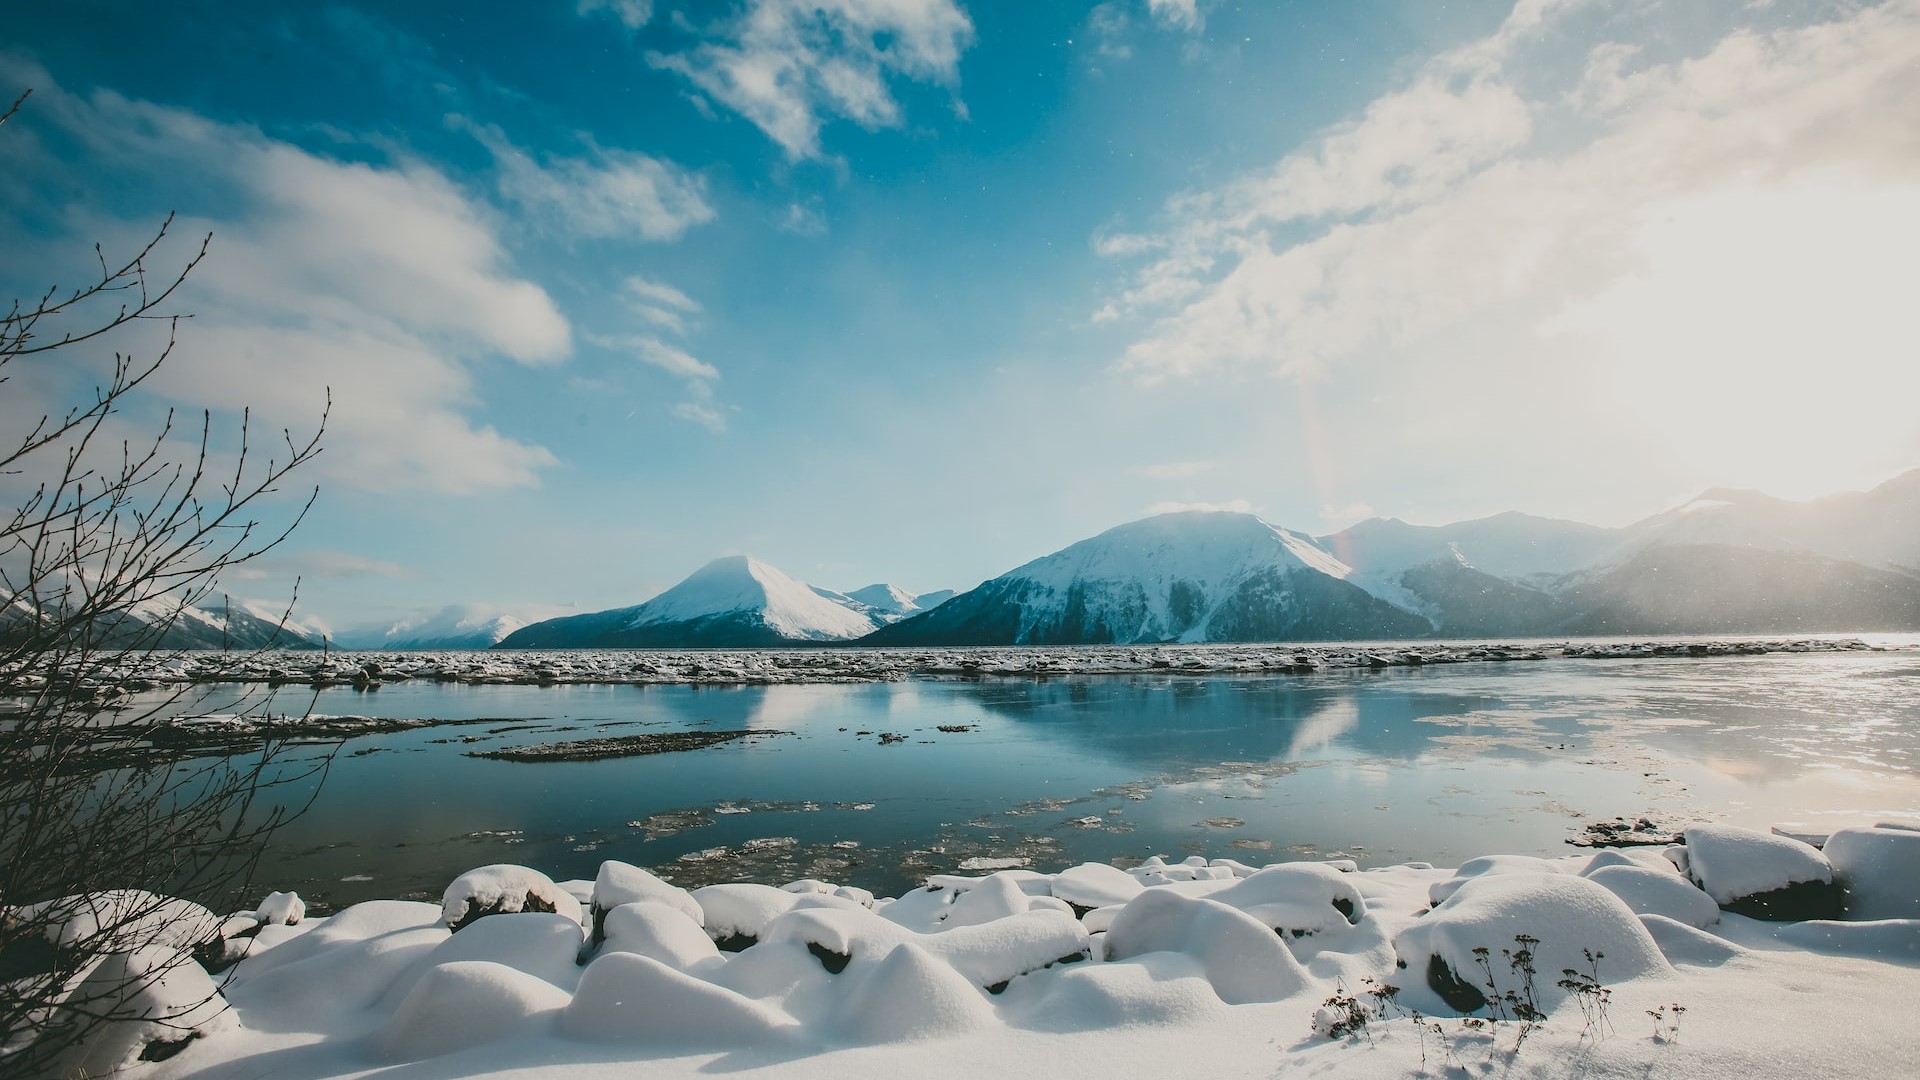 Snowy Mountains in Alaska | Goodwill Car Donations